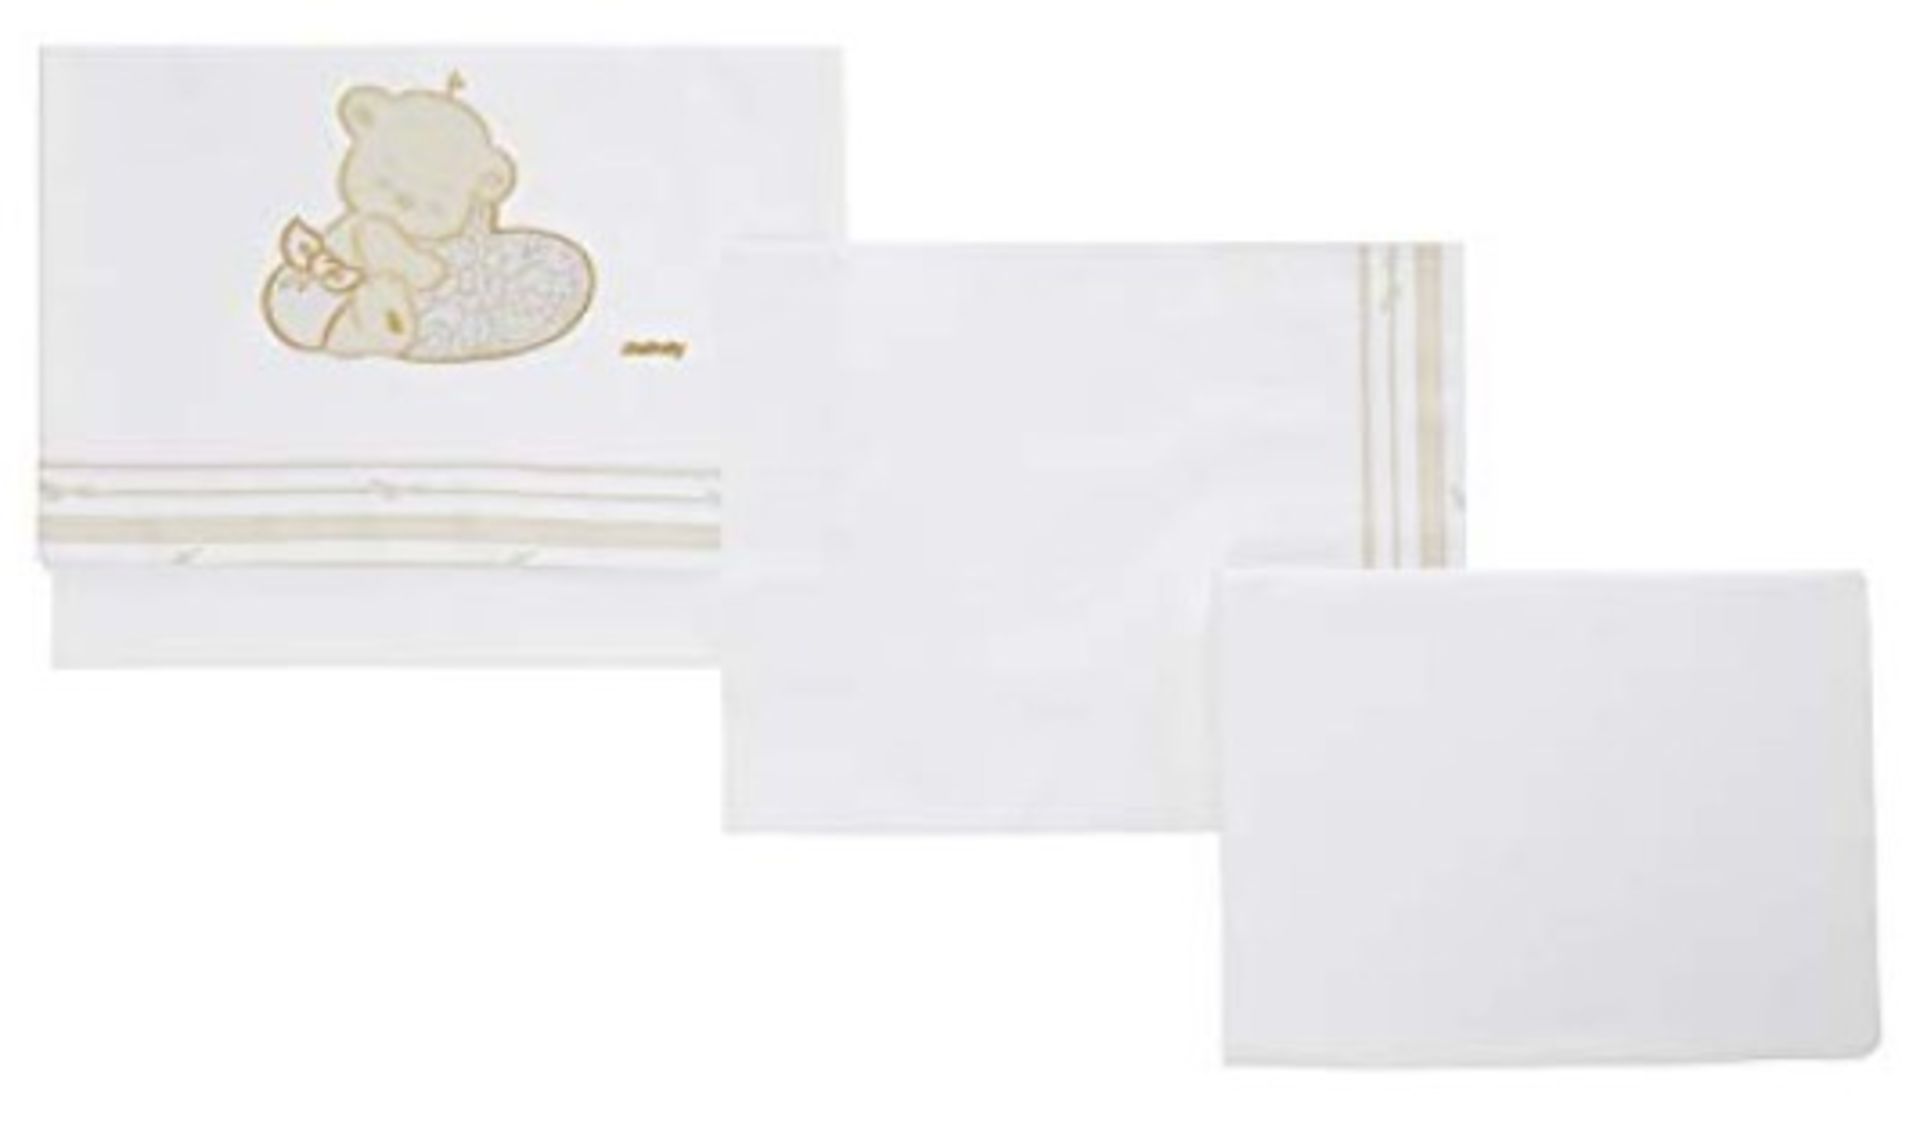 Brand New Italbaby Love Cot Sheet Set, Ivory, 3-Piece RRP £108.80